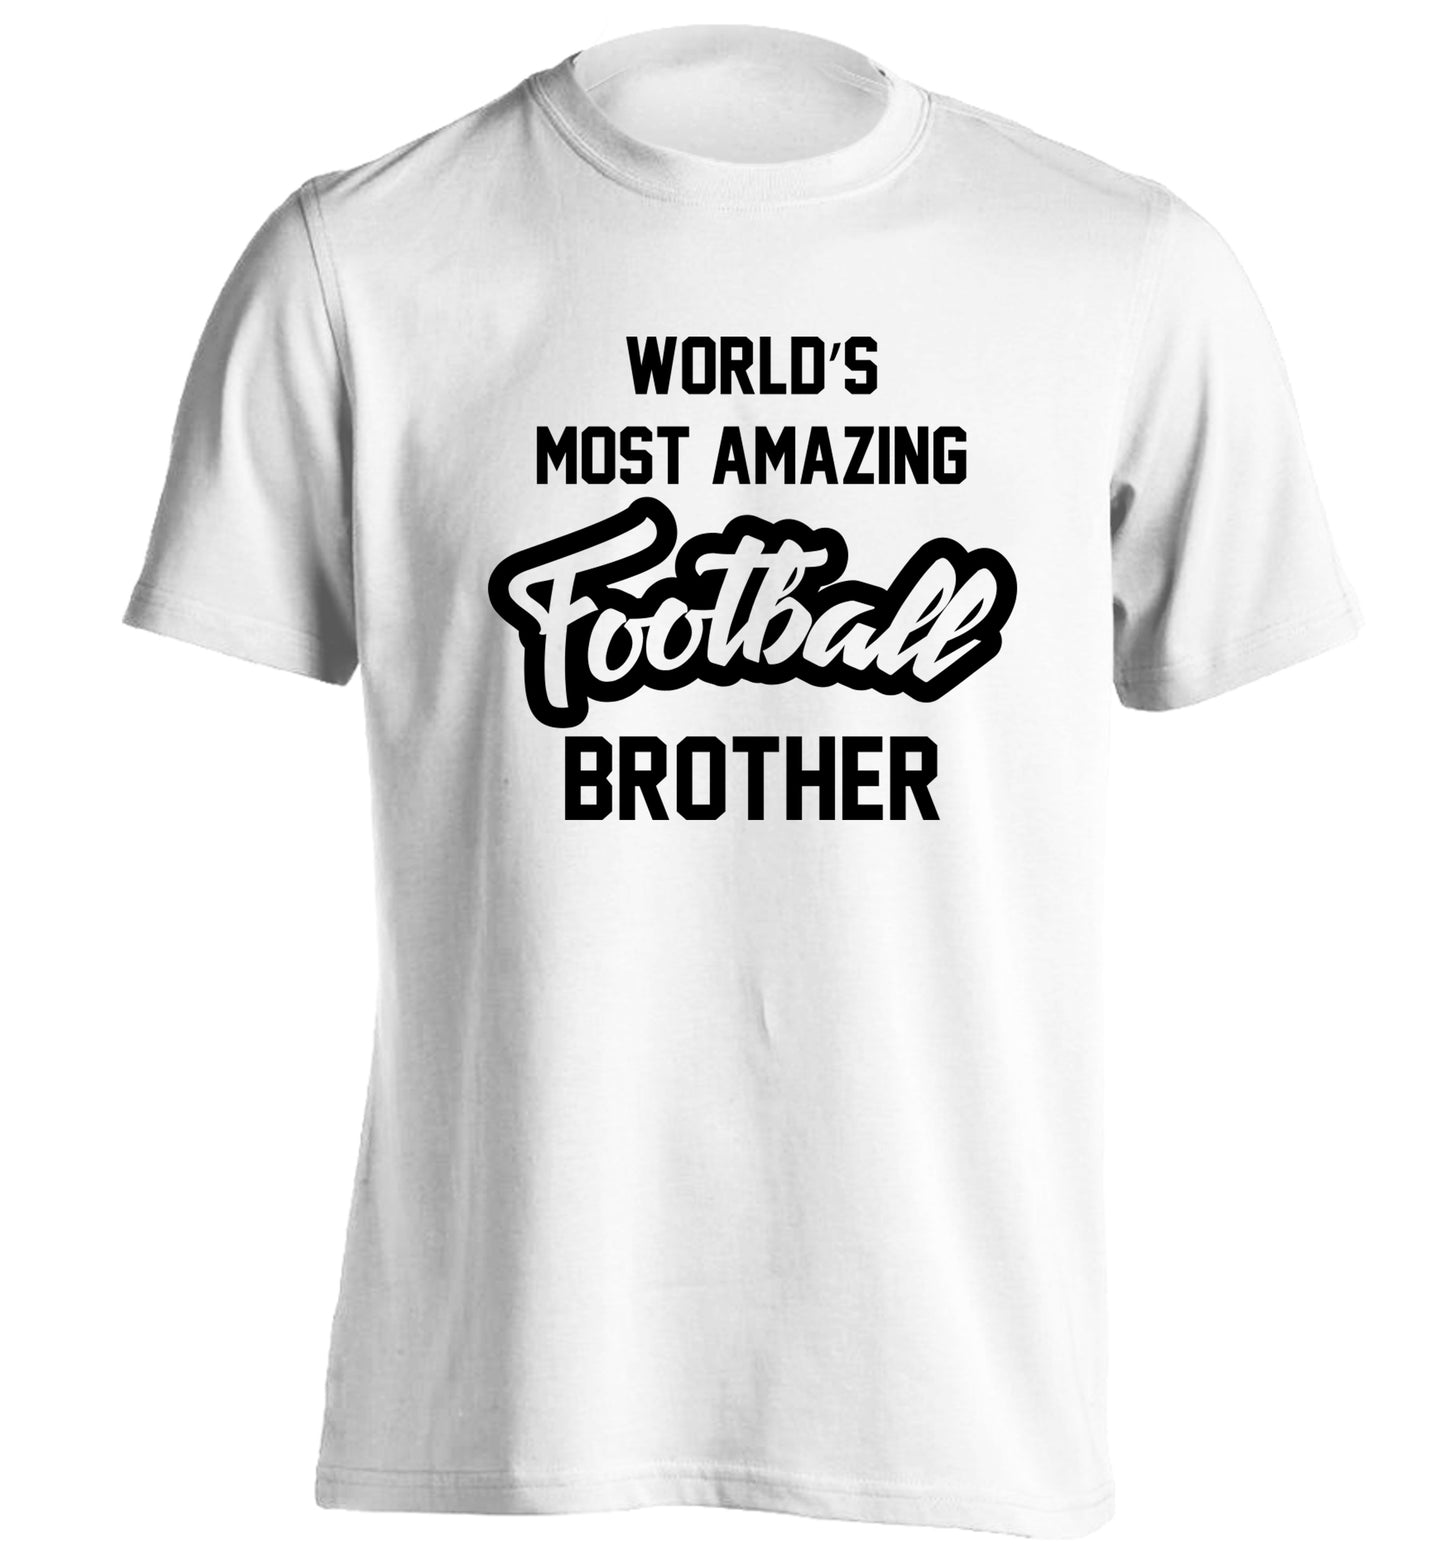 Worlds most amazing football brother adults unisexwhite Tshirt 2XL